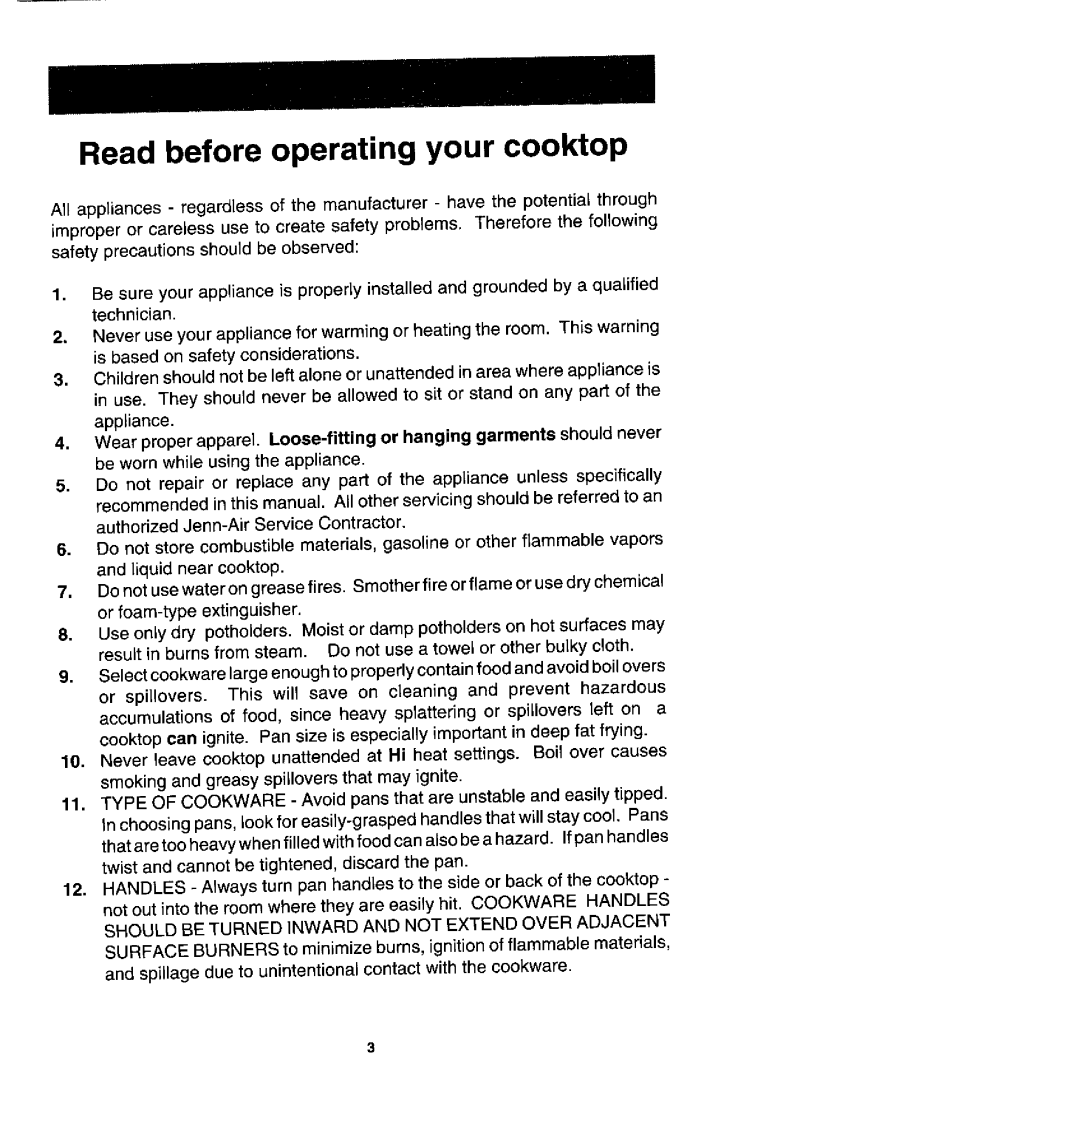 Jenn-Air CVG2420 manual Read before operating your cooktop 